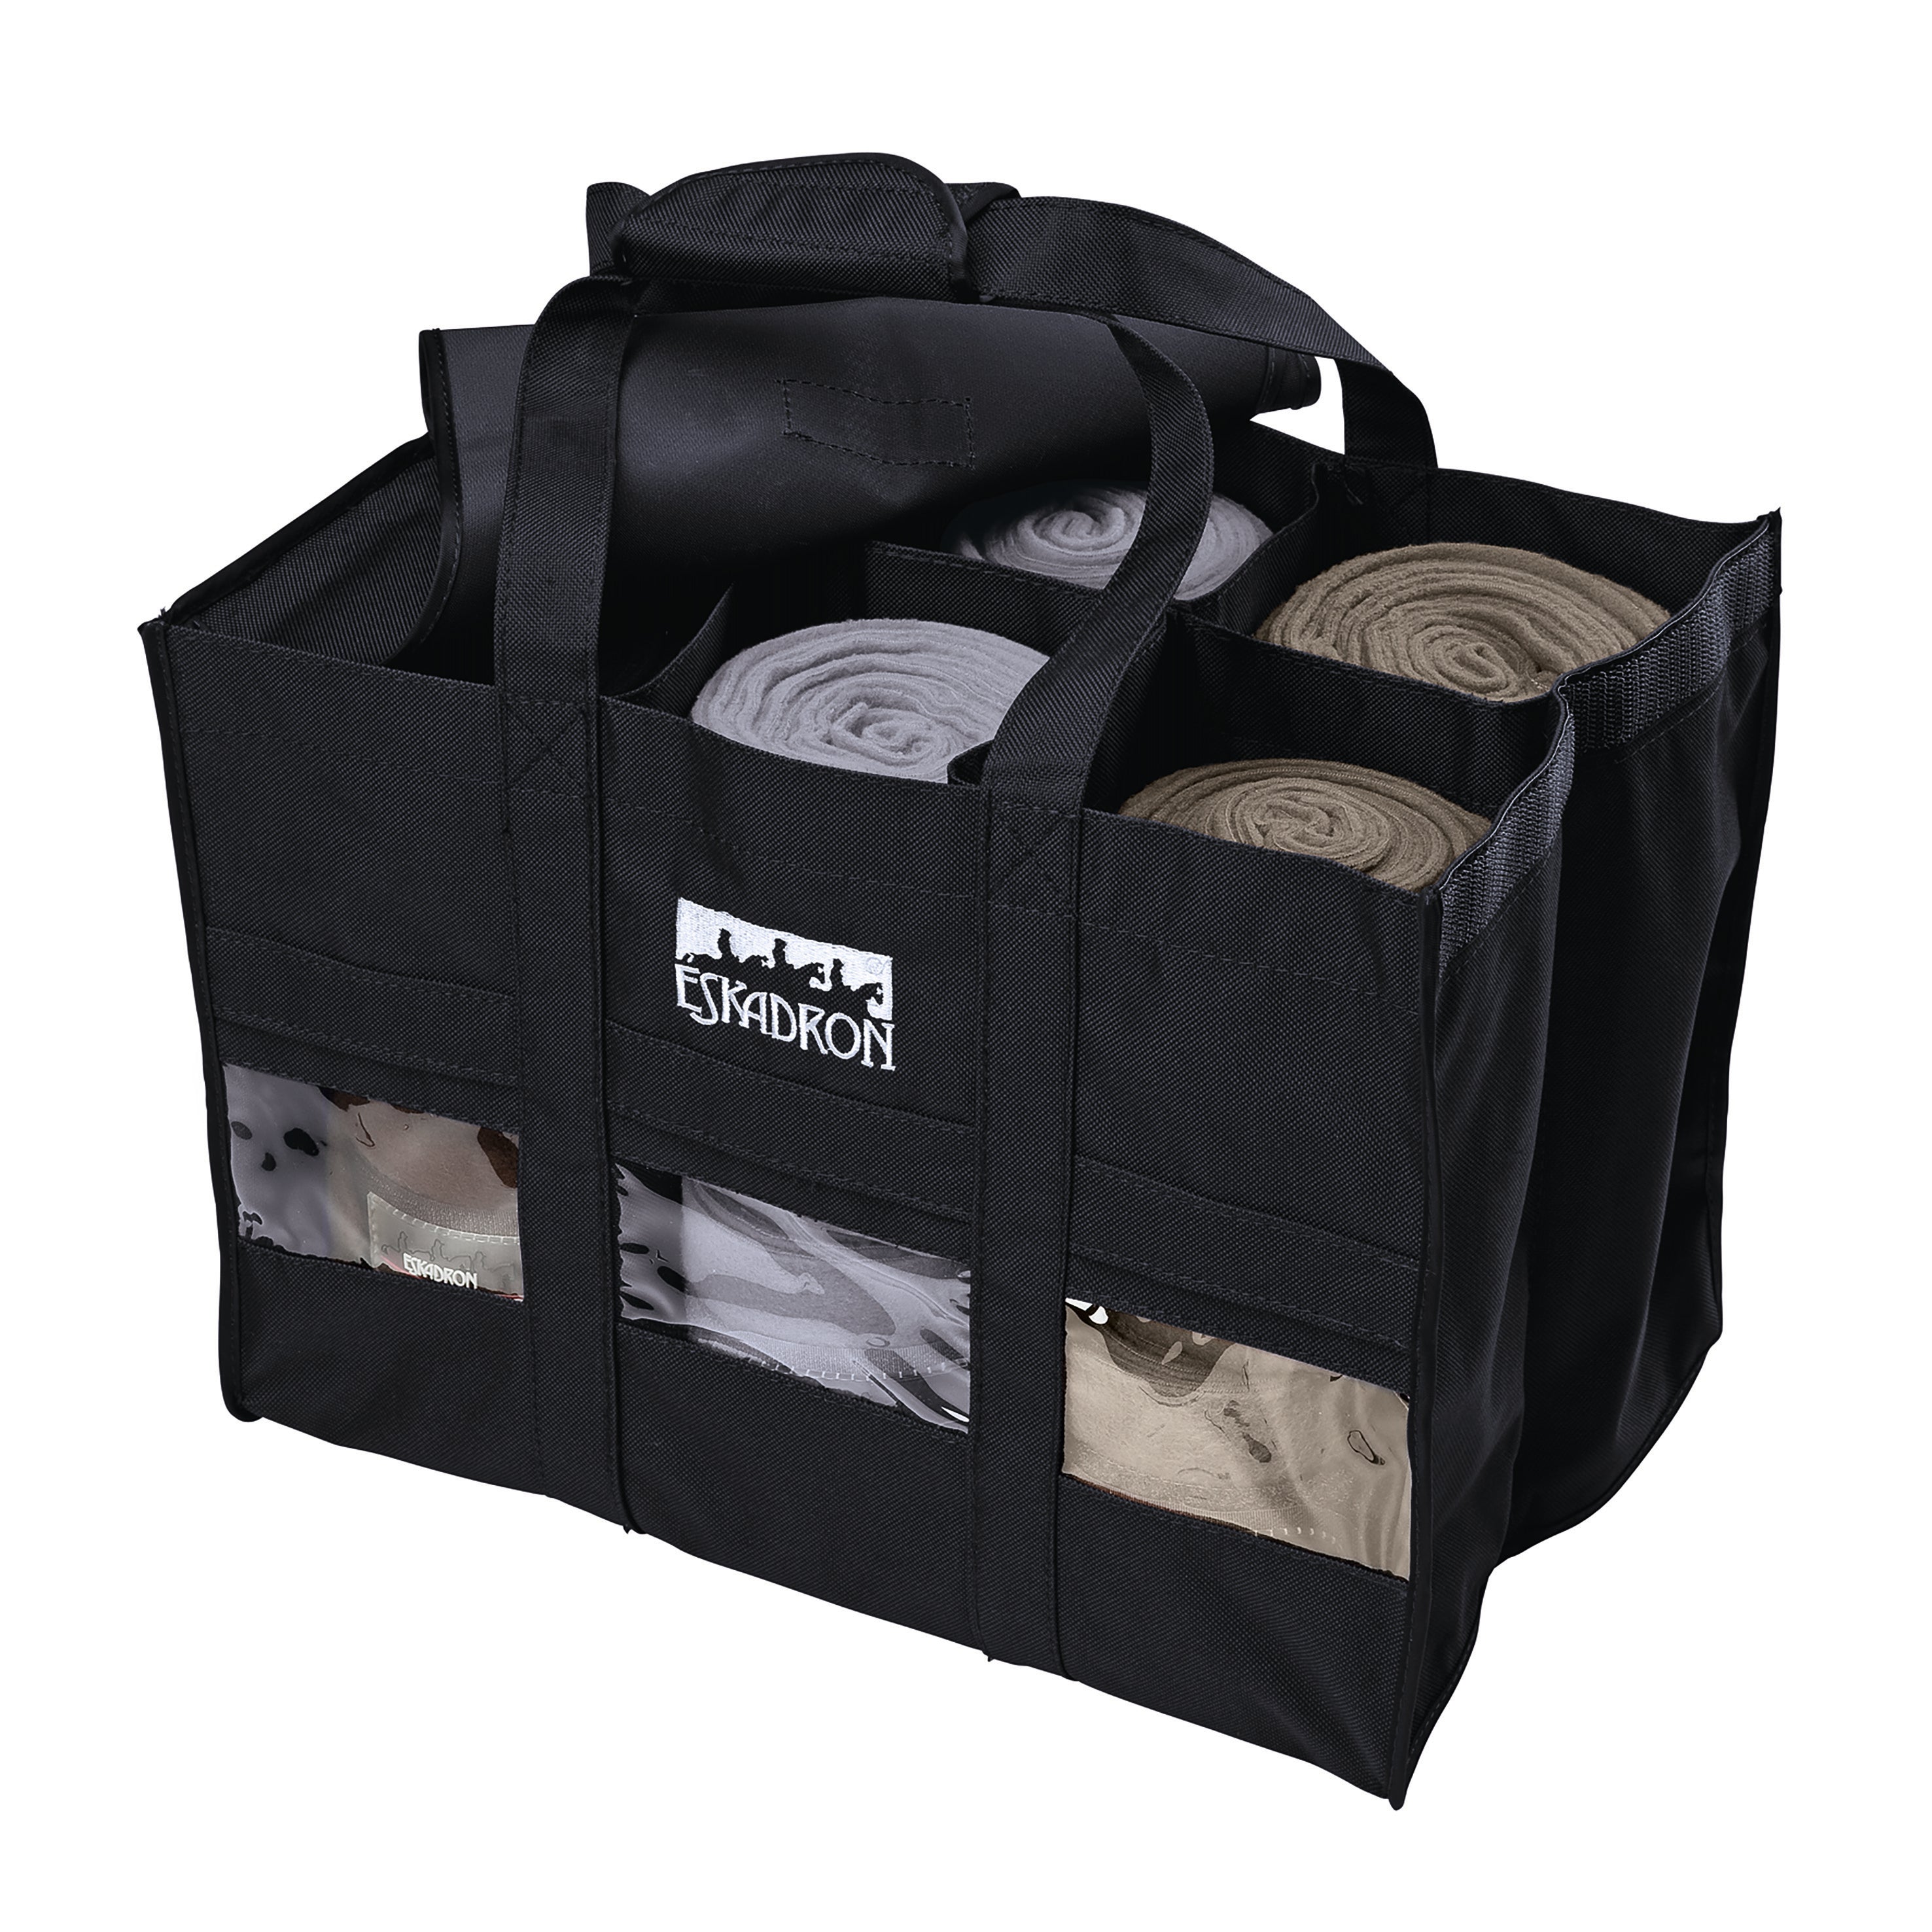 Eskadron Bandage Bag - Now in Black